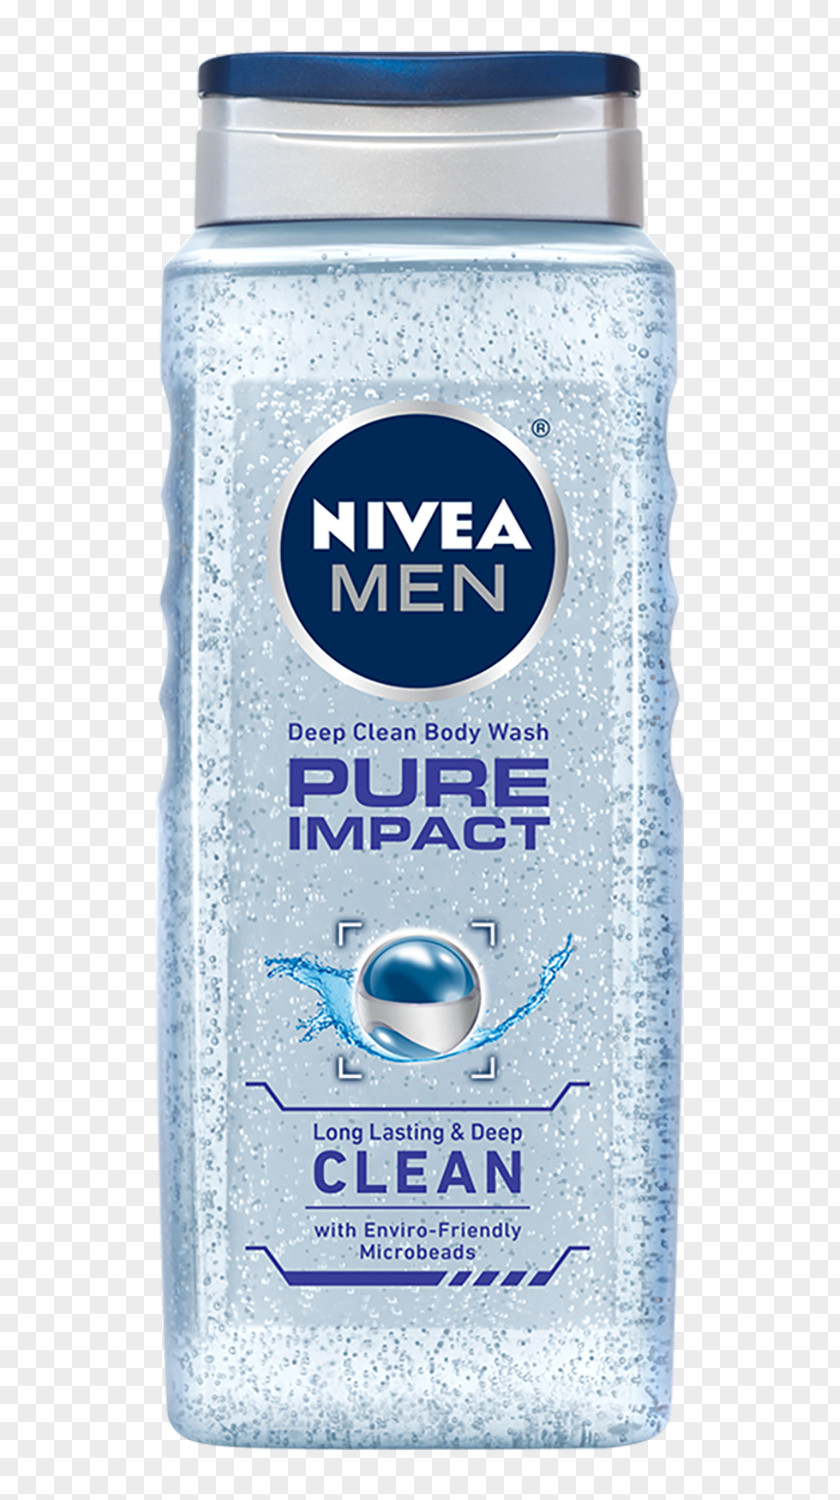 Nivea Shower Gel NIVEA Men Creme Cosmetics Deodorant PNG